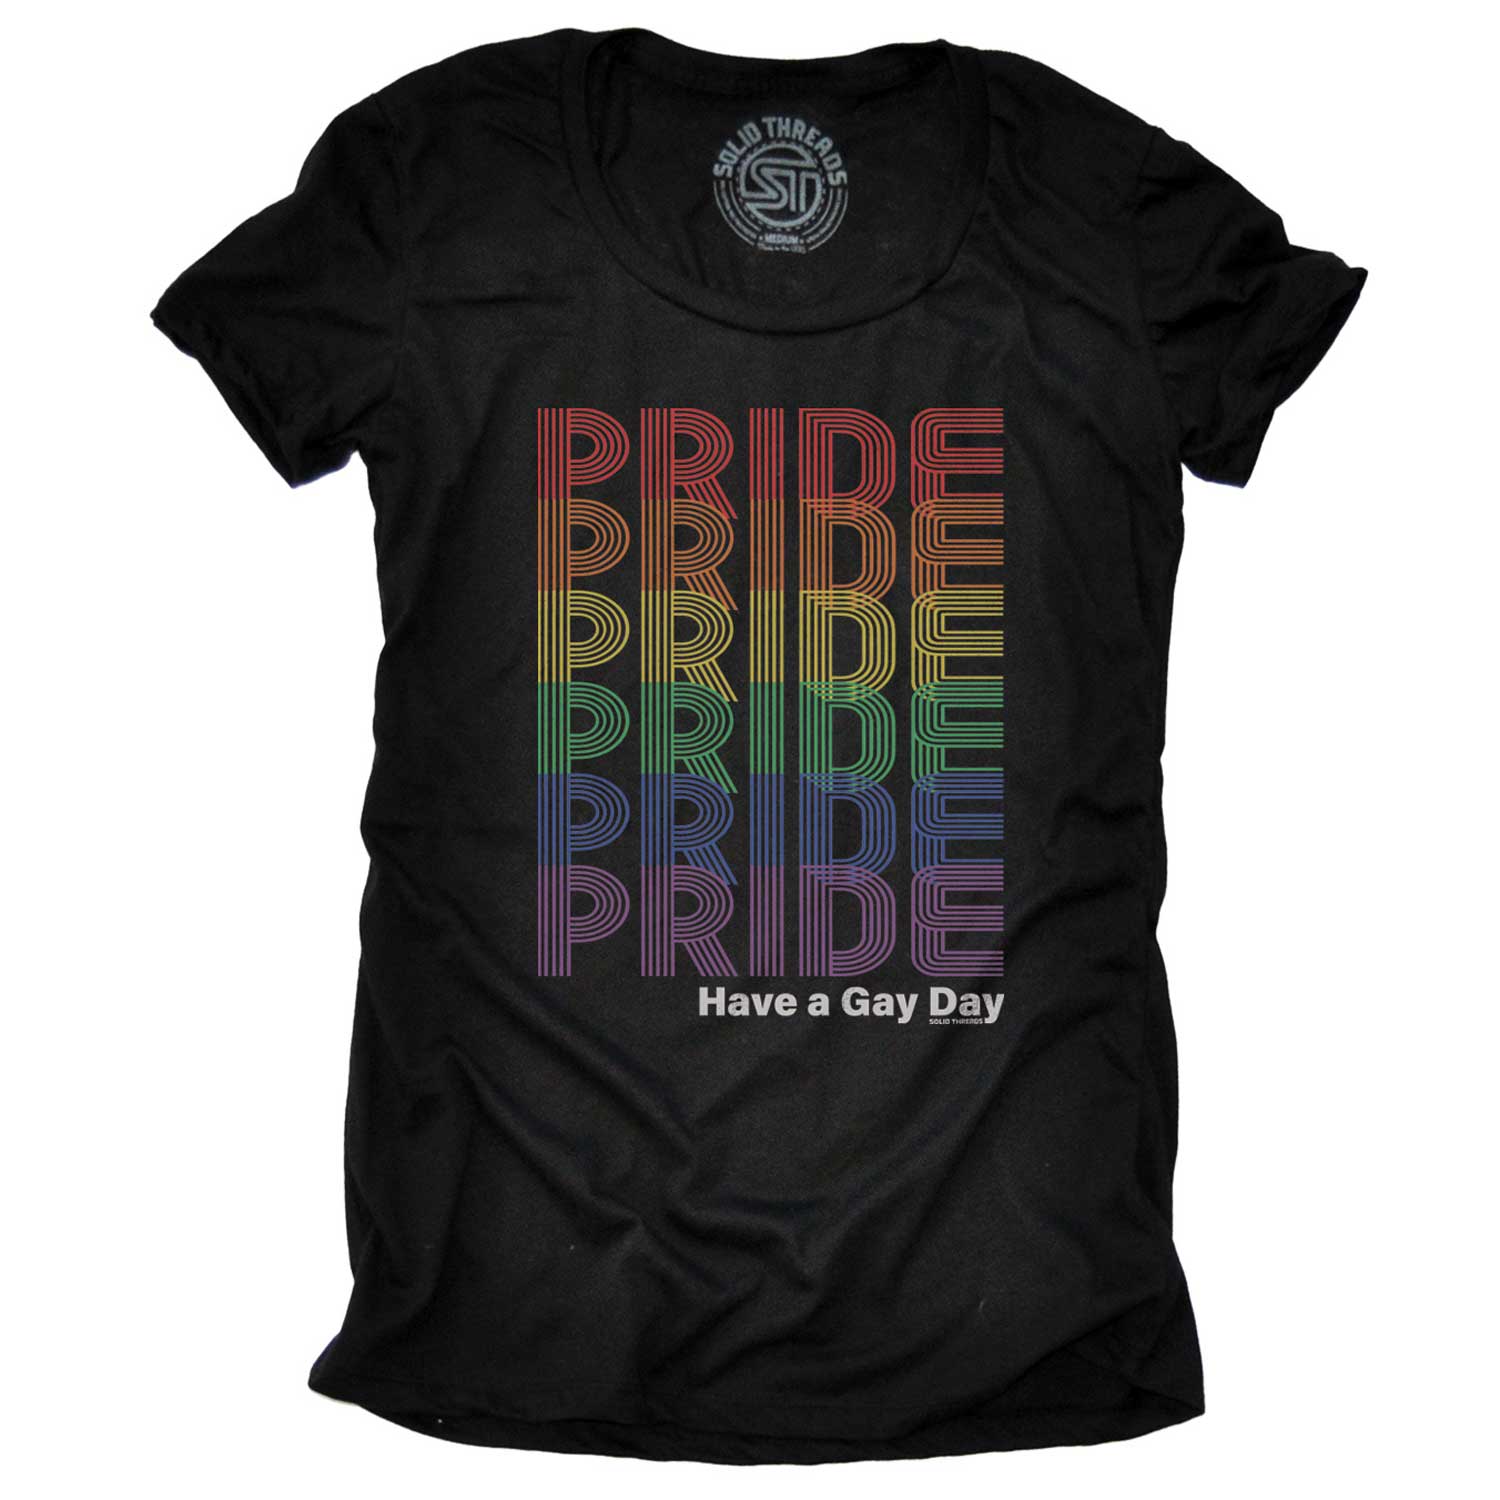 Women's Vintage Pride Rainbow Fade Graphic Tee | Retro Gay Rights T-shirt